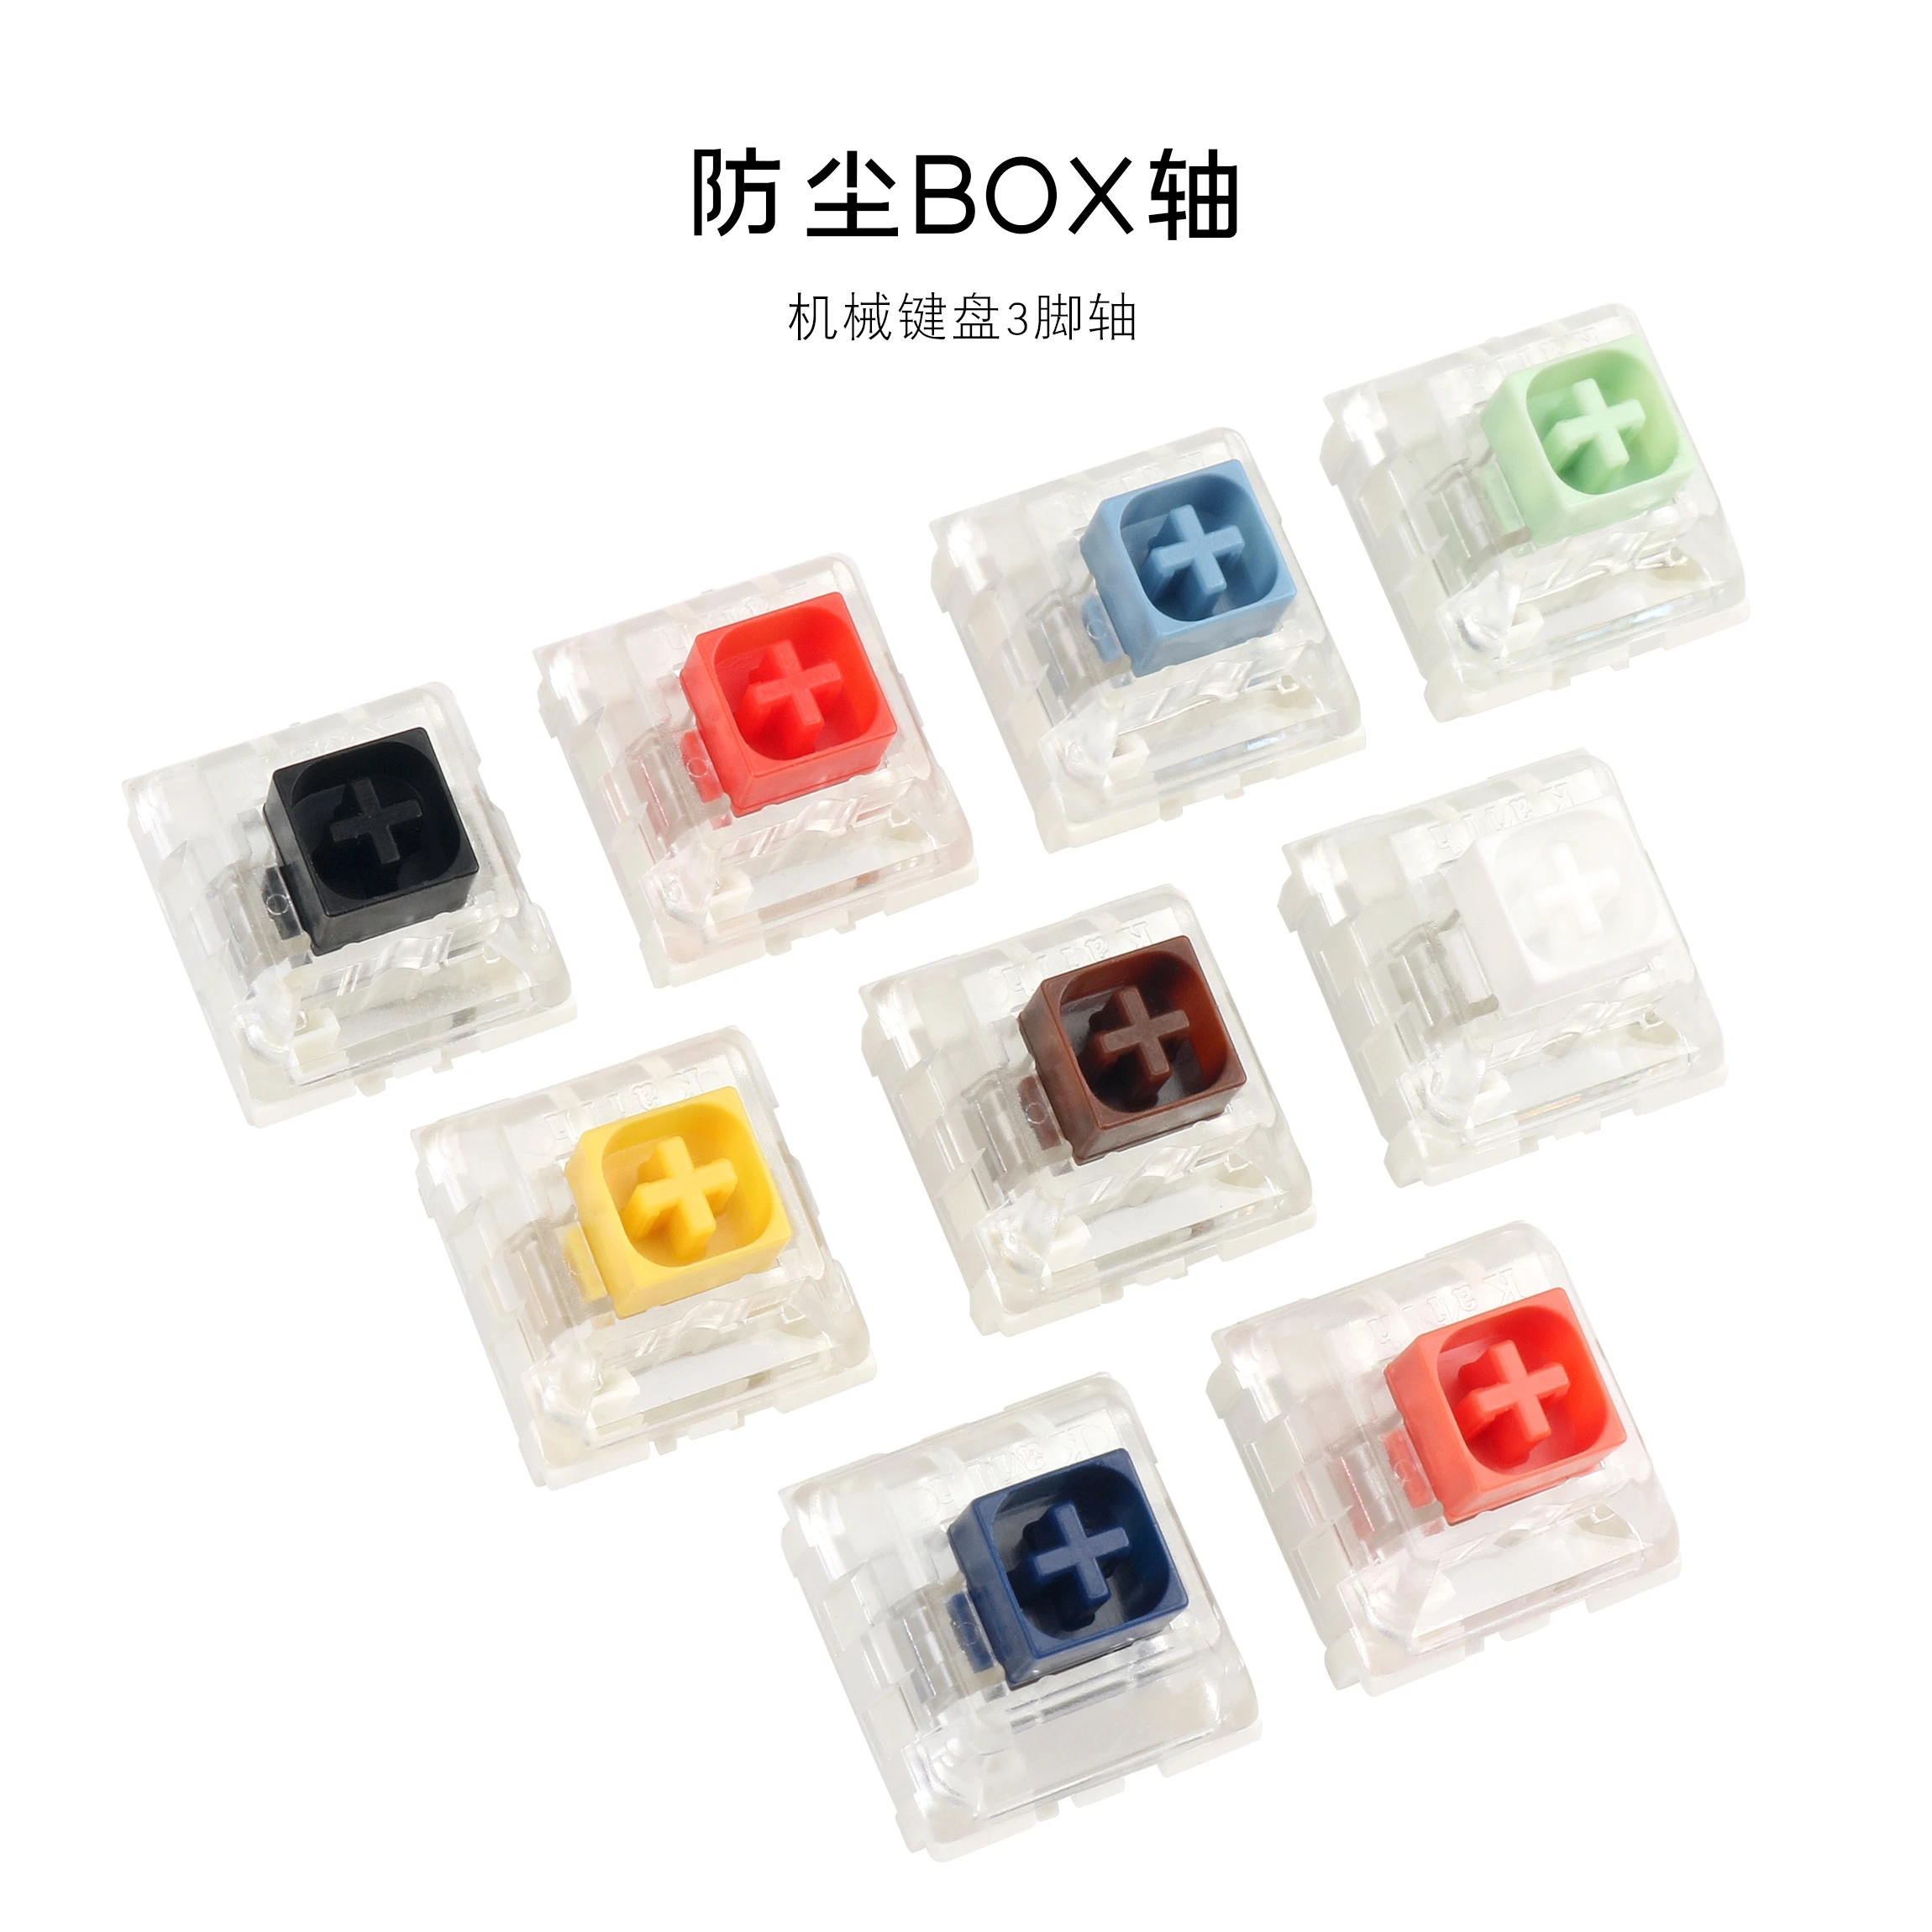 

21pcs Kailh a set of box Mechanical Keyboard switches for China Style/Hako Royal/Hako/Box Heavy 3pins